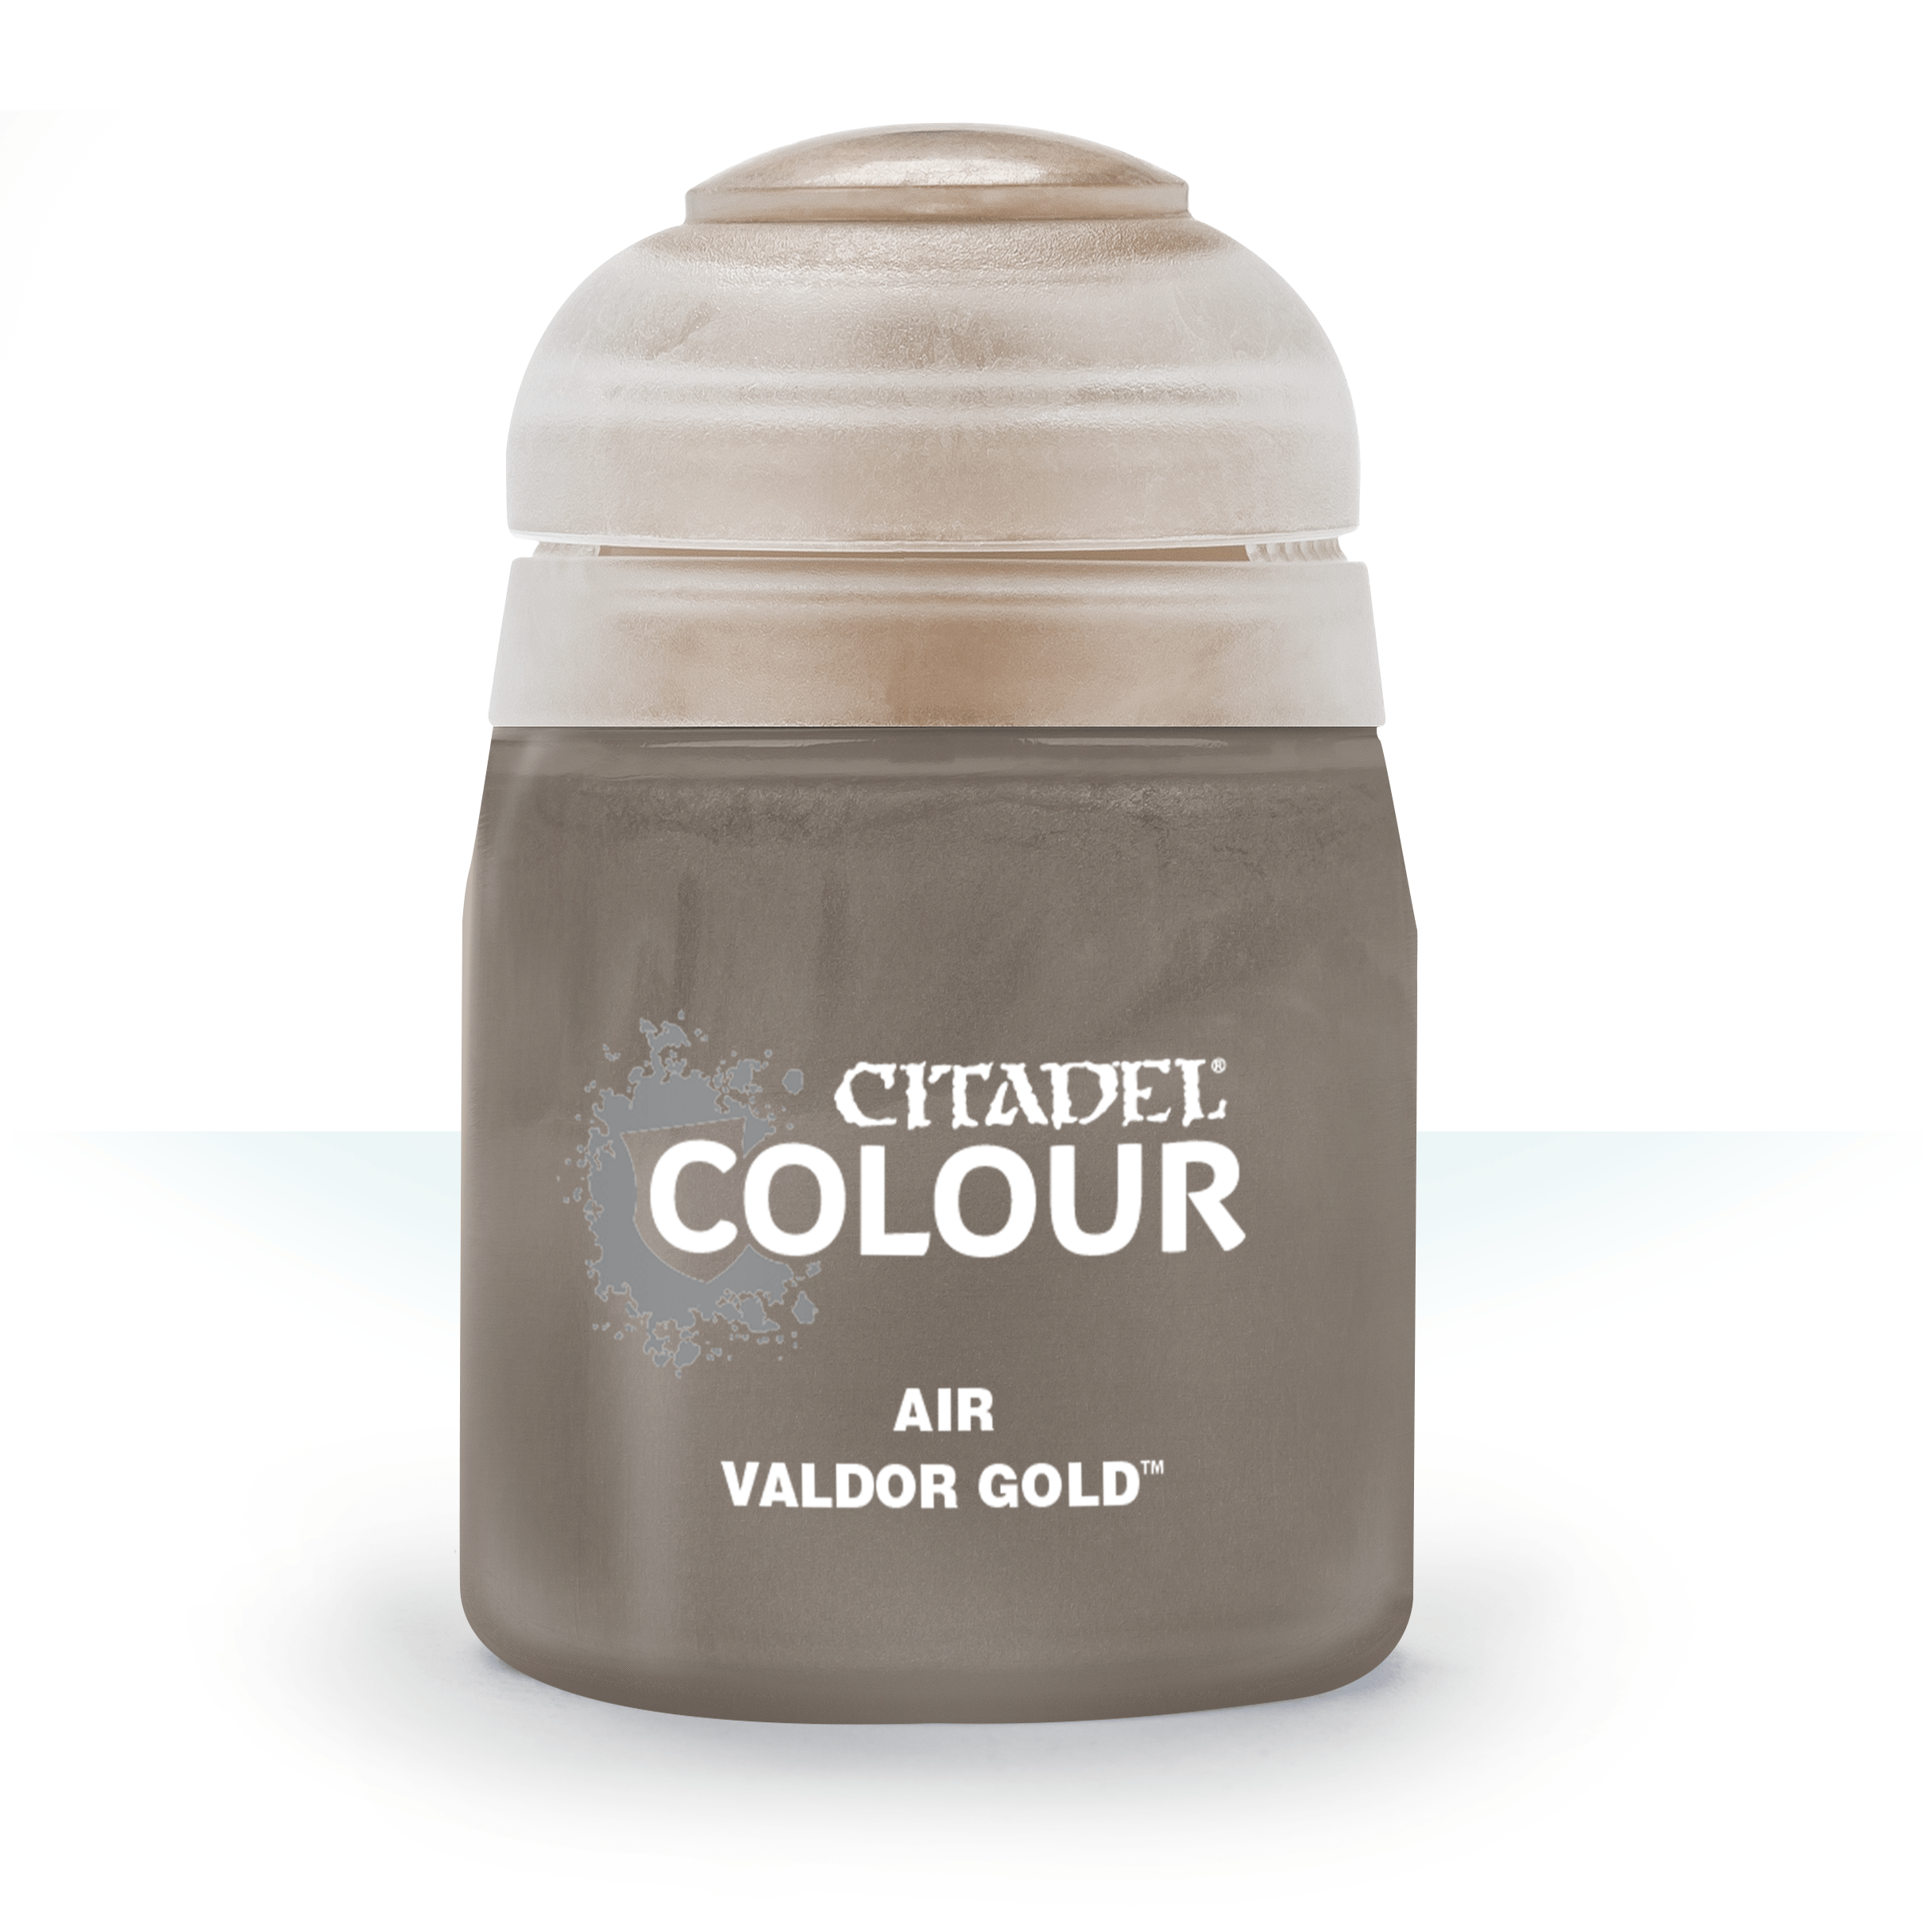 Air Valdor Gold - Citadel Colour - 24 ml